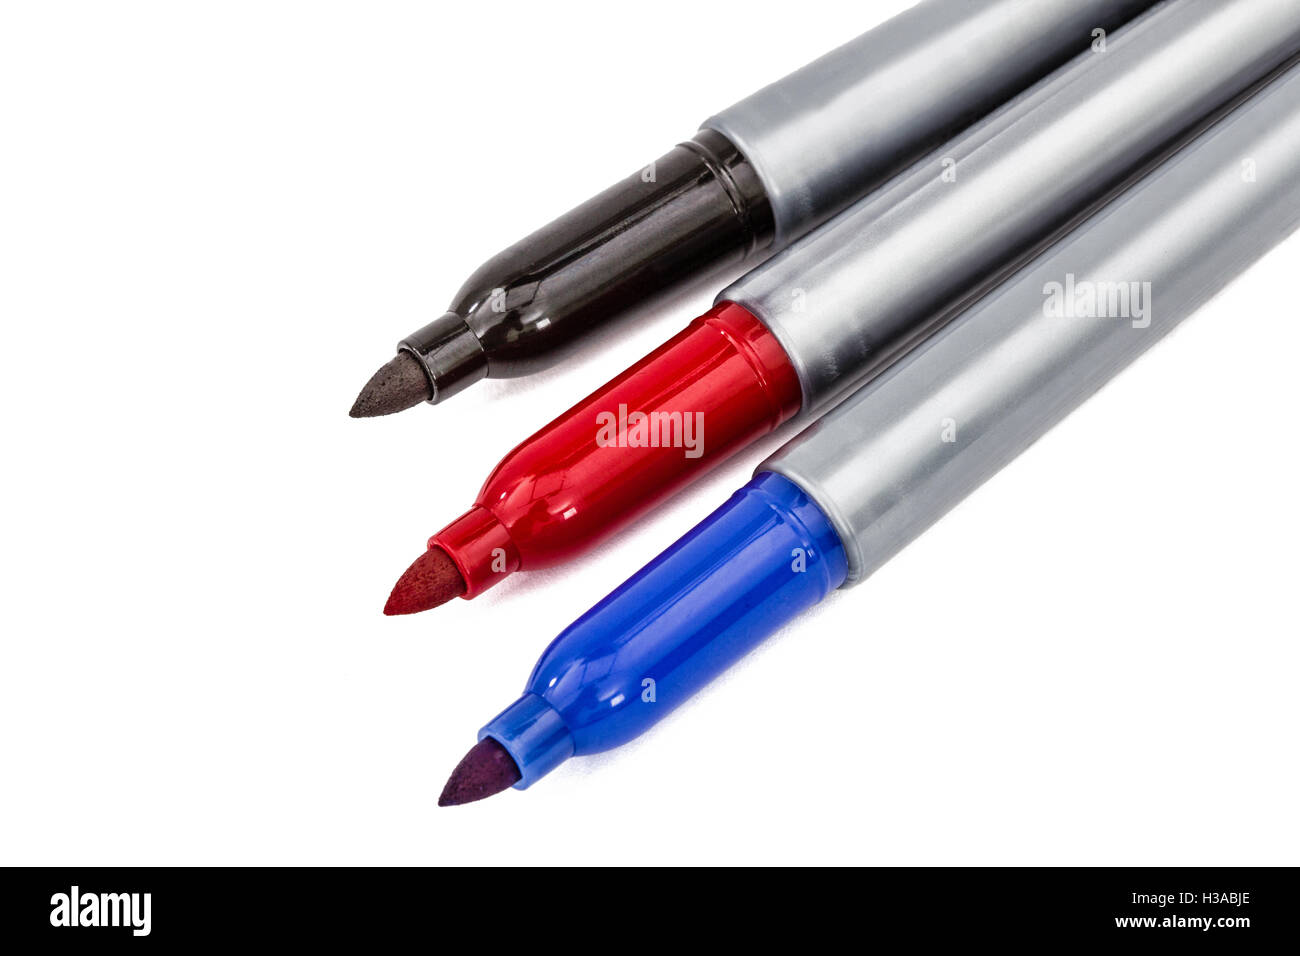 Open Felt-tip Pens (markers) Stock Photo - Image of artist, pink: 6017934